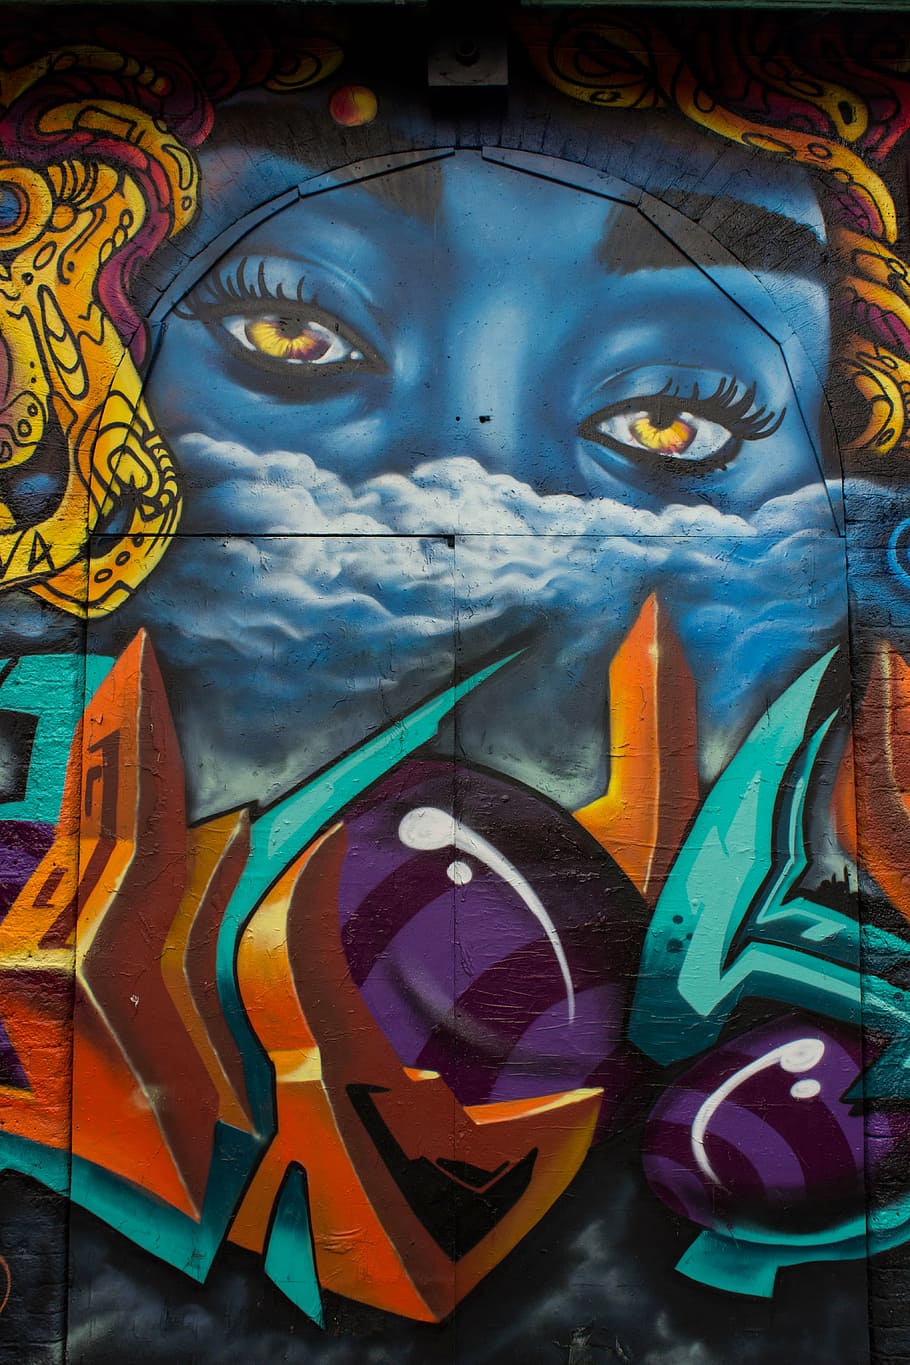 graffiti character artwork, wall, street art, brick lane, london, shoreditch, eastend, street, art, urban art